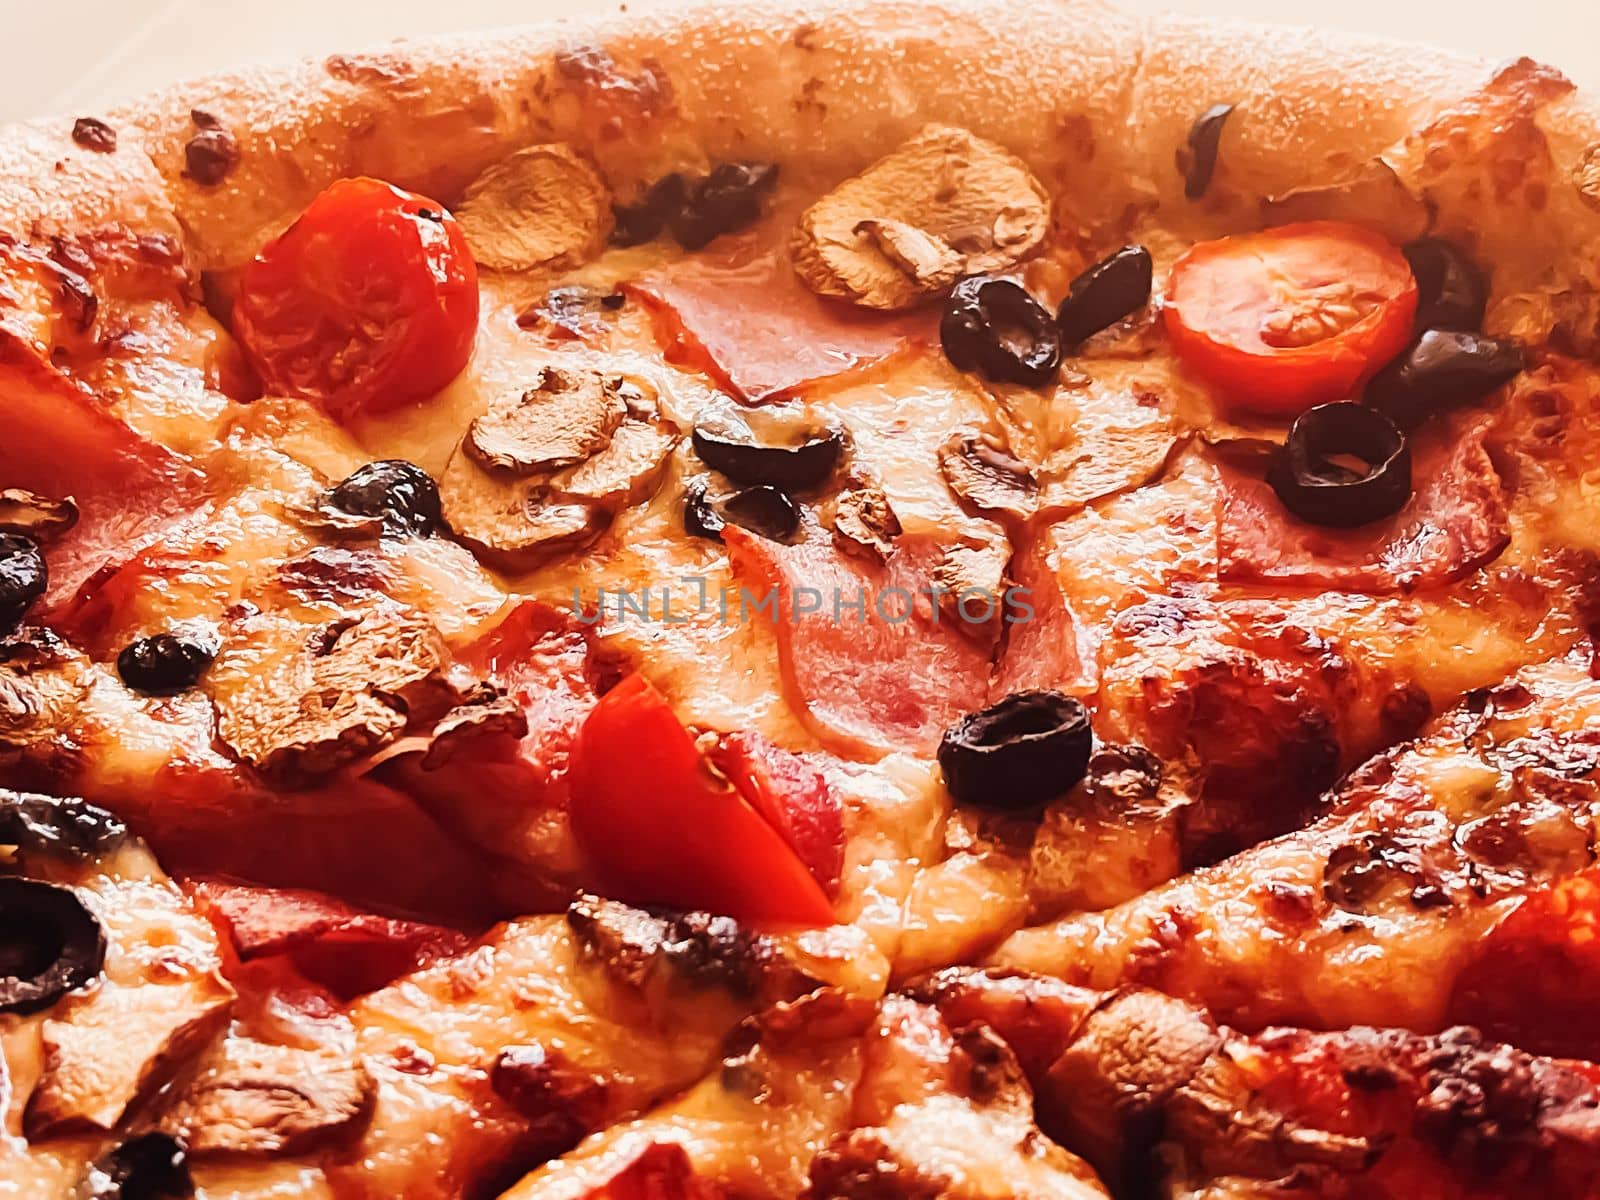 Pizza capriciosa in pizzeria, food background by Anneleven